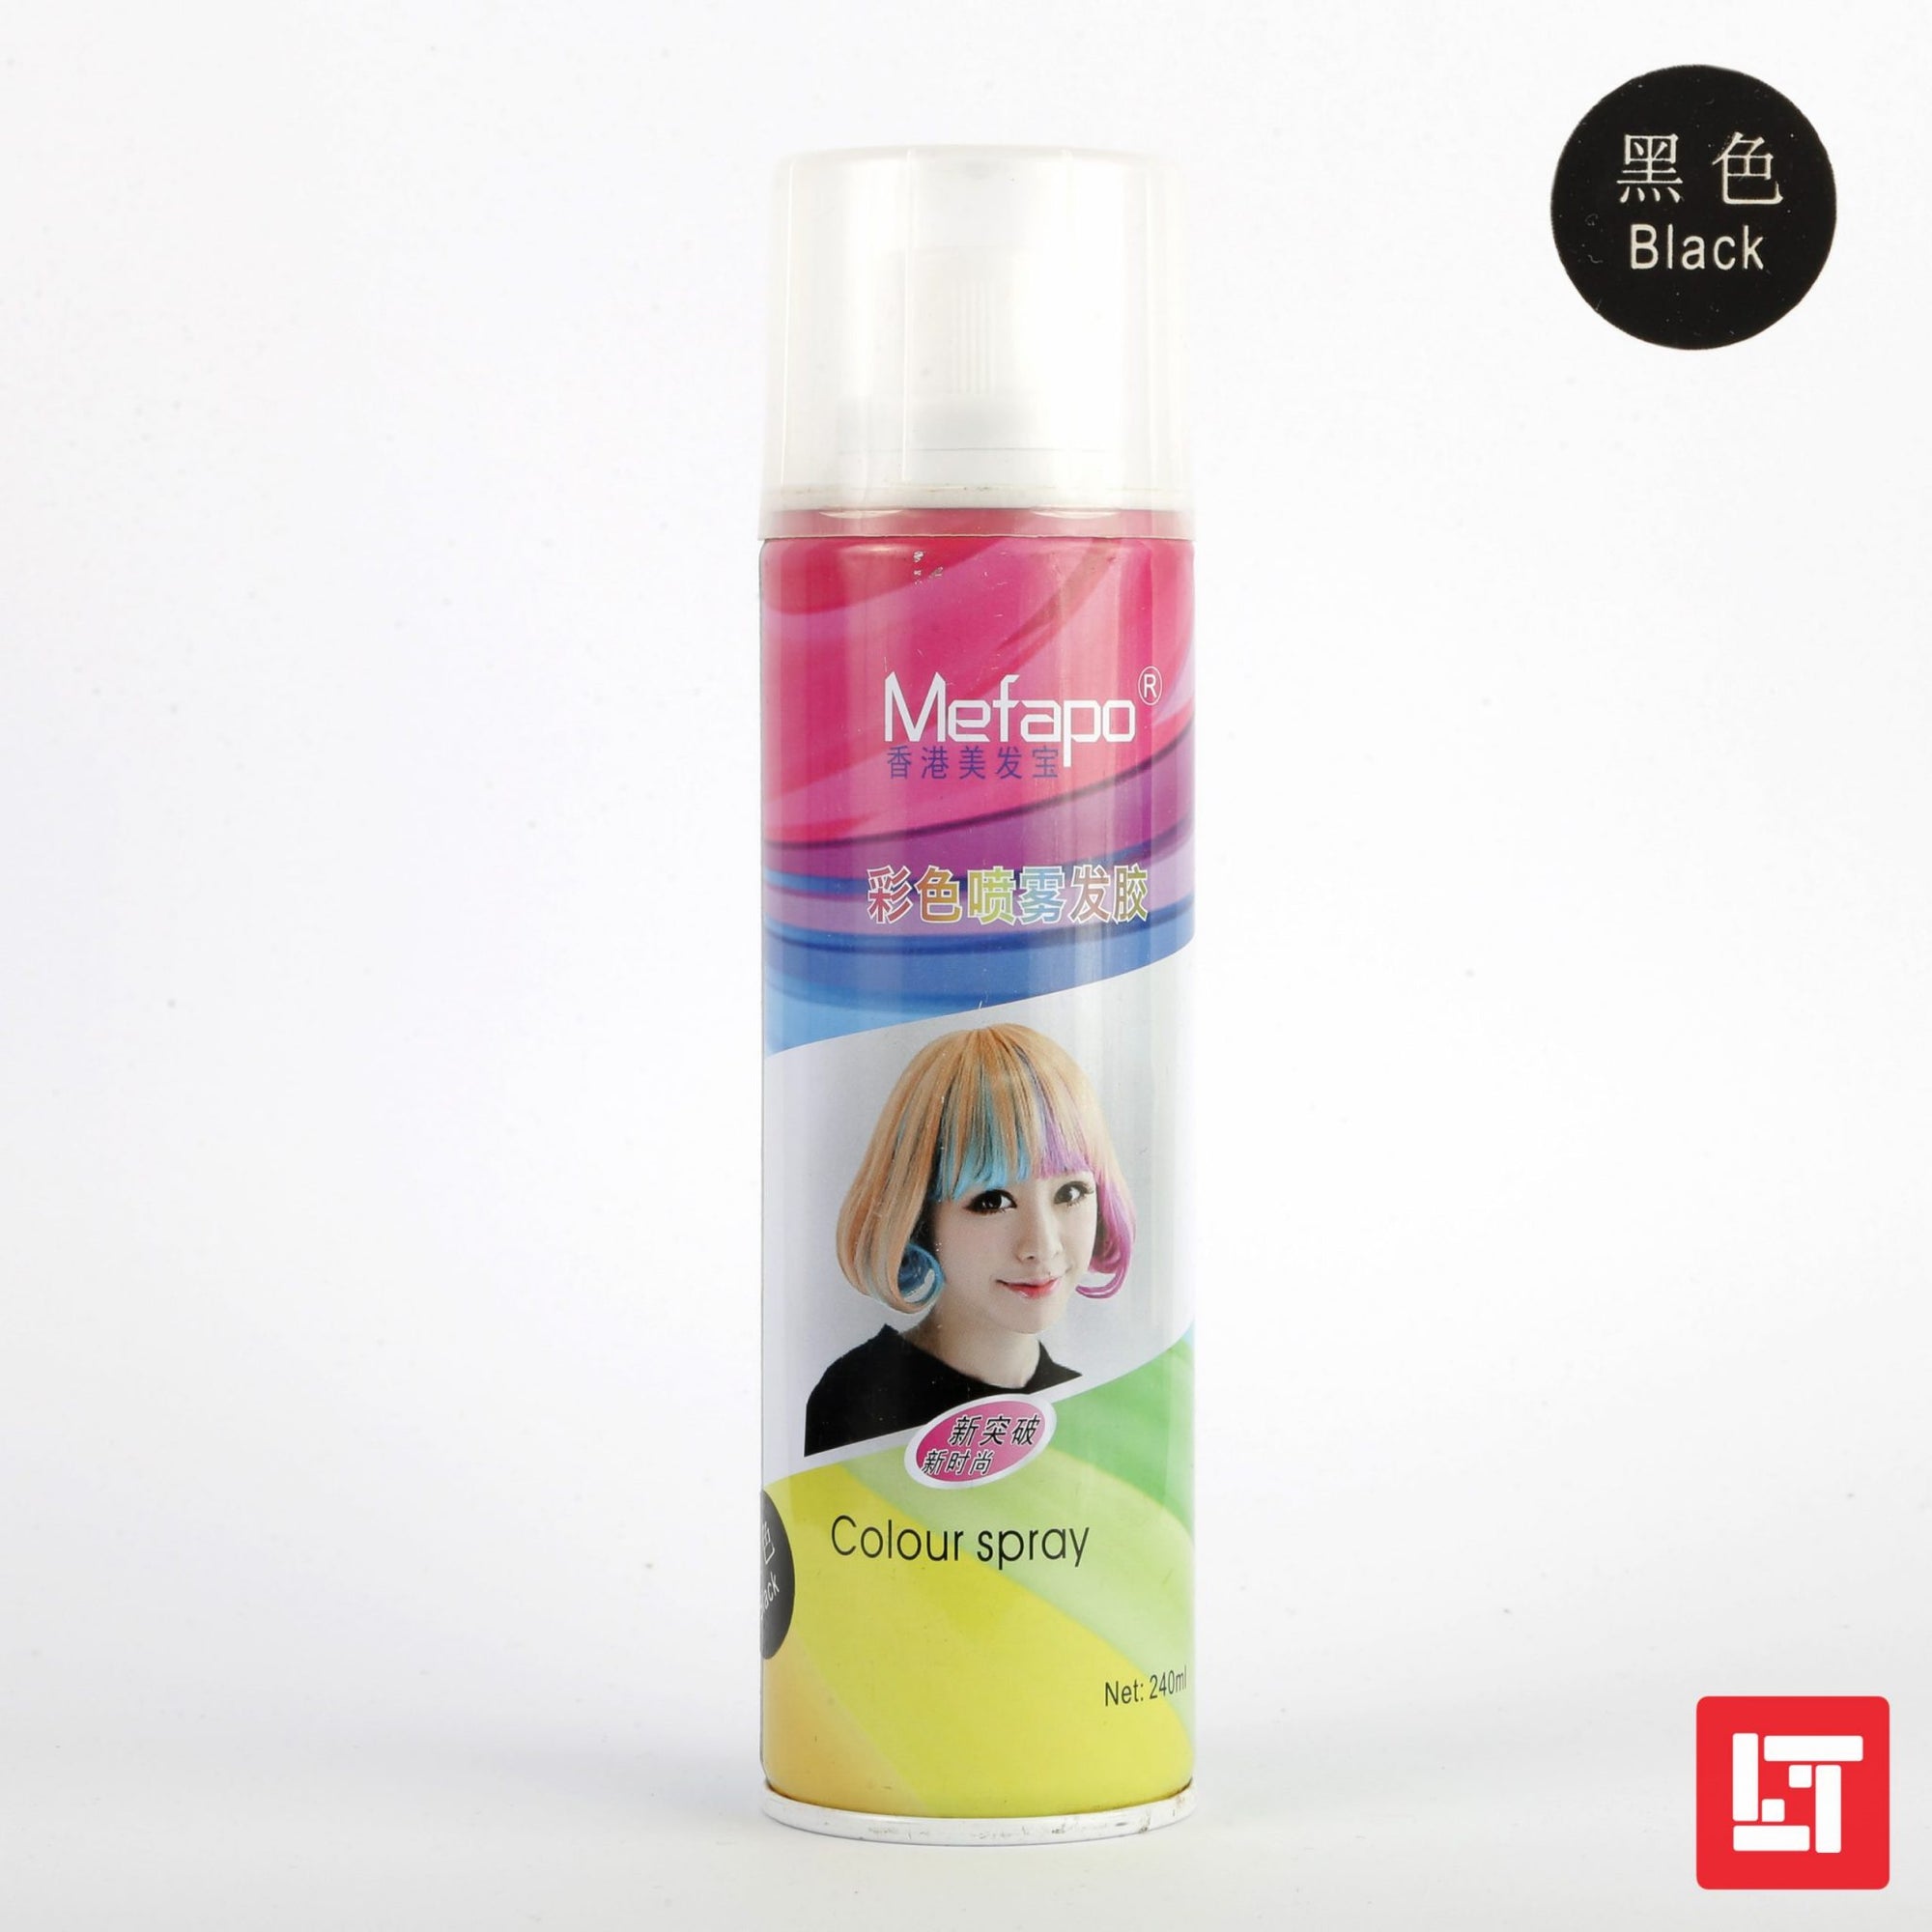 Mefapo Color Hair Spray 240ml Black freeshipping - lasertag.pk